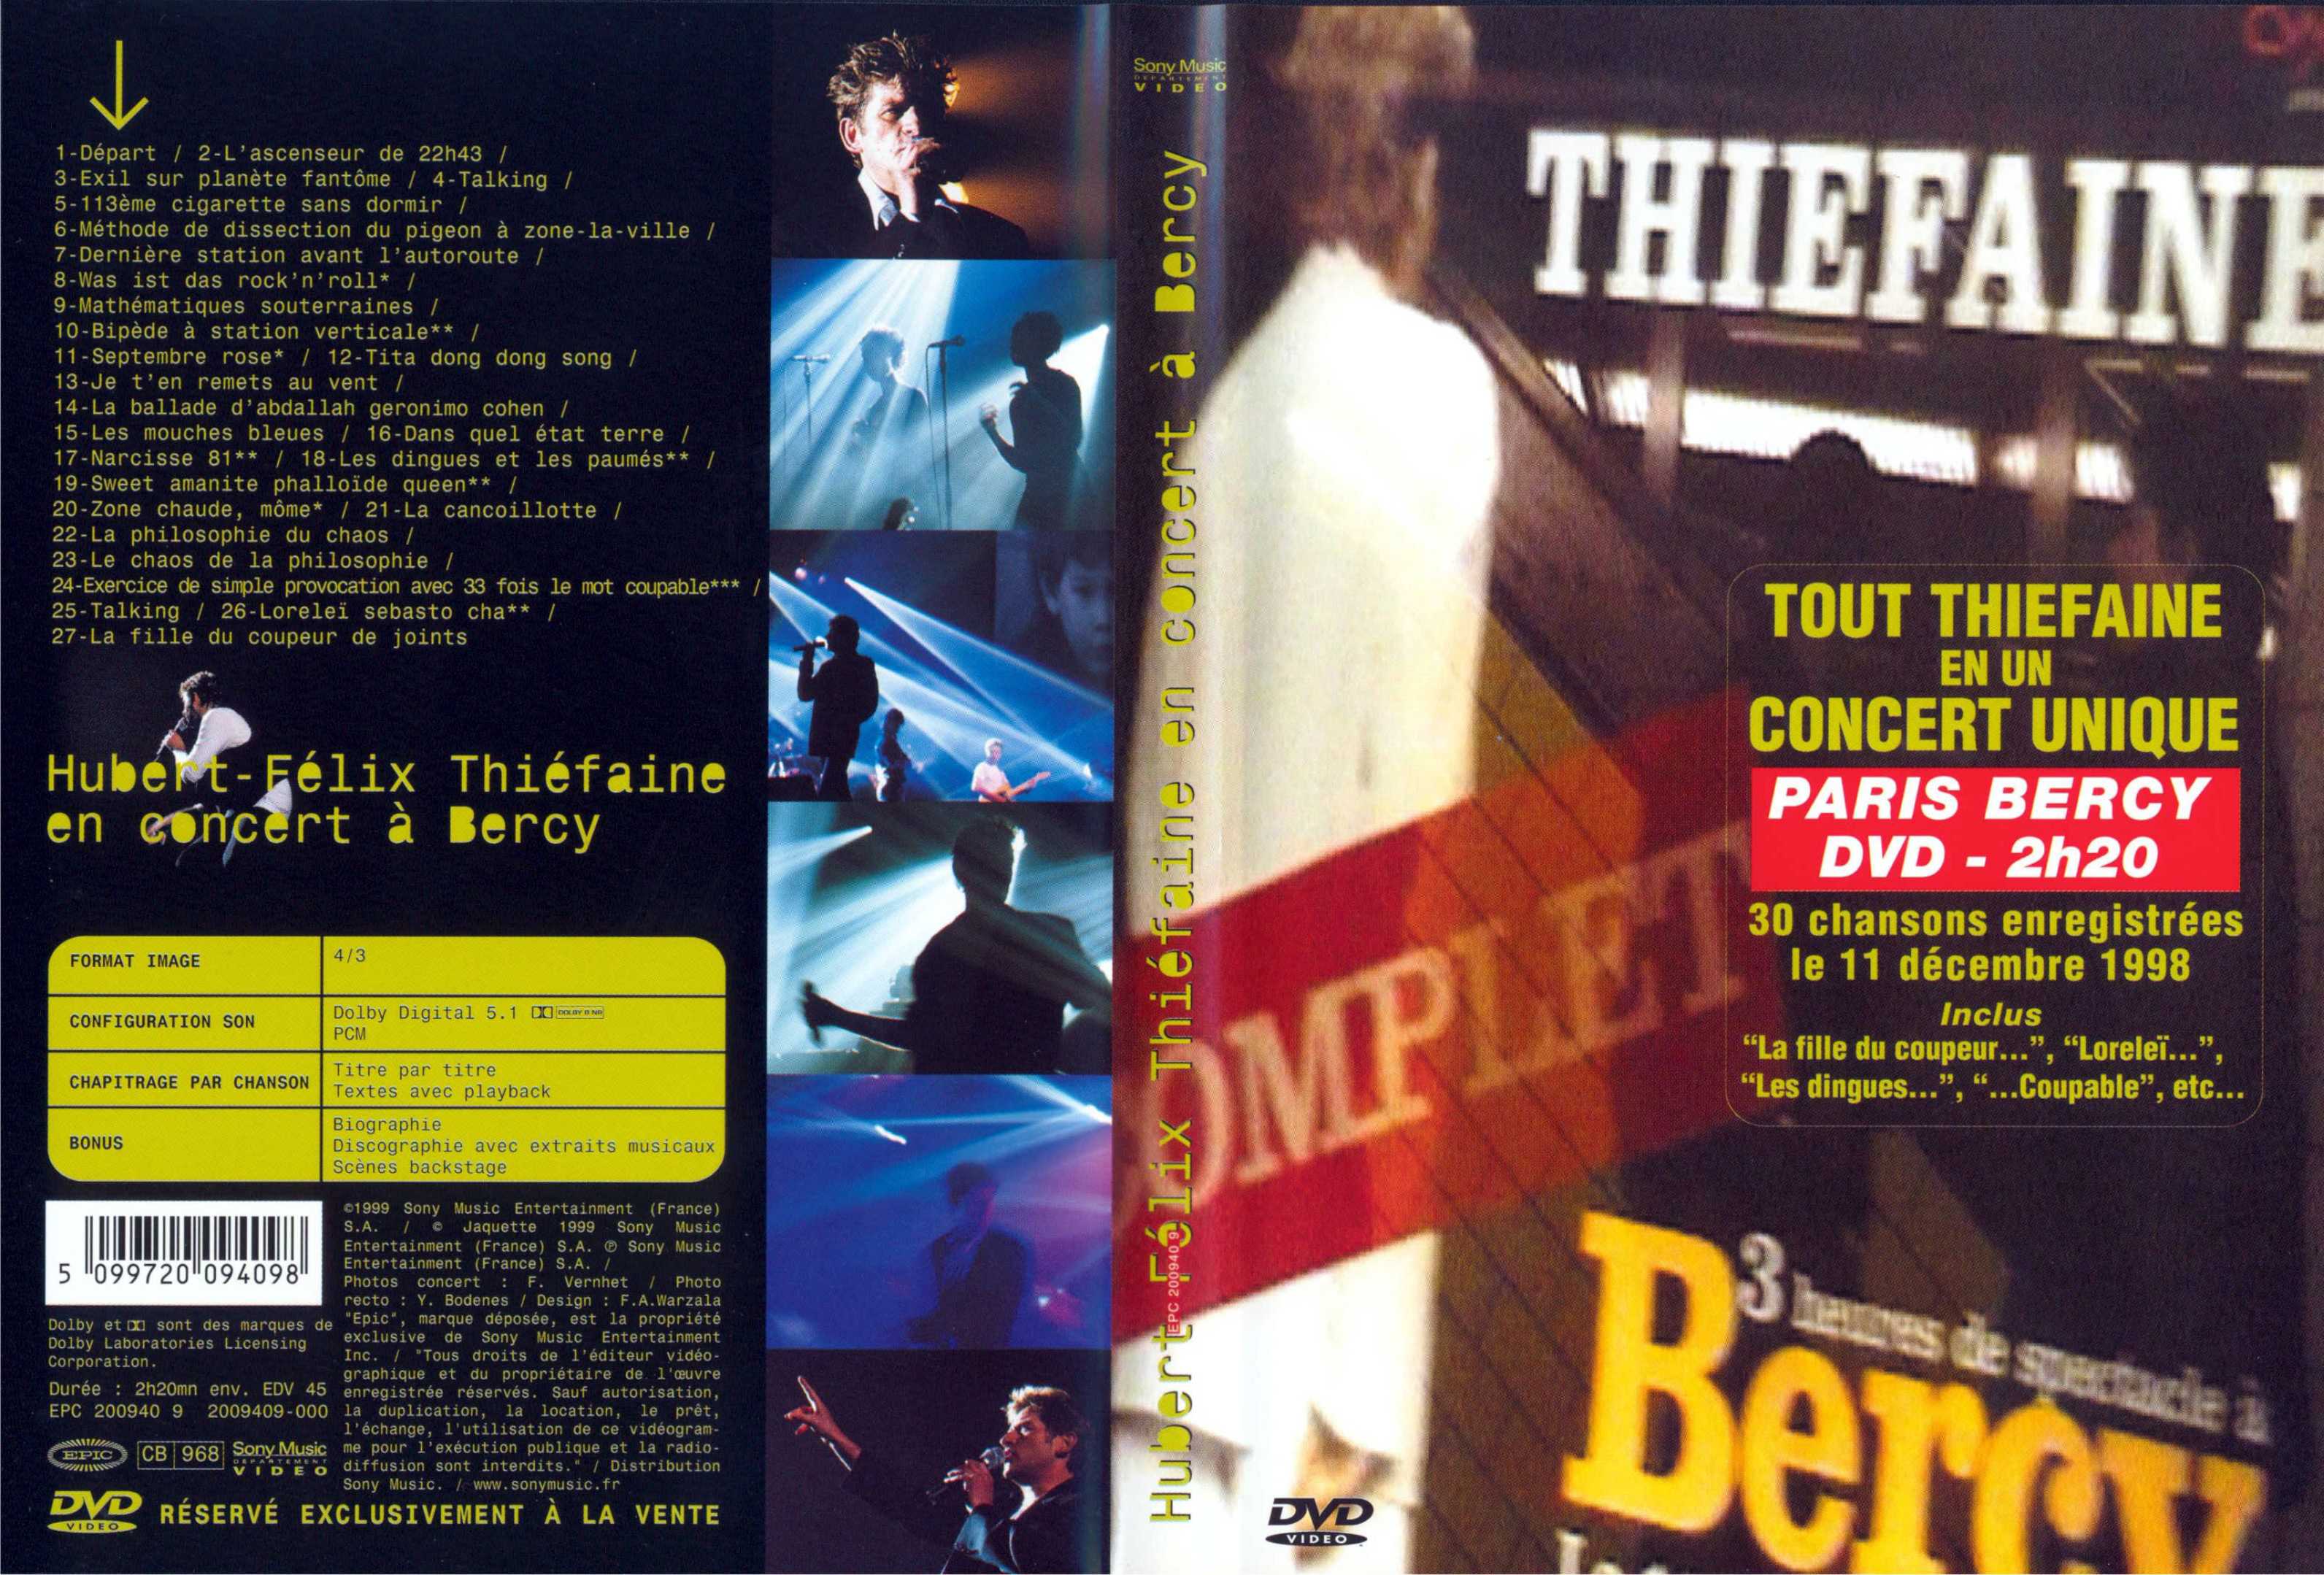 Jaquette DVD Hubert Felix Thiefaine  bercy 1998